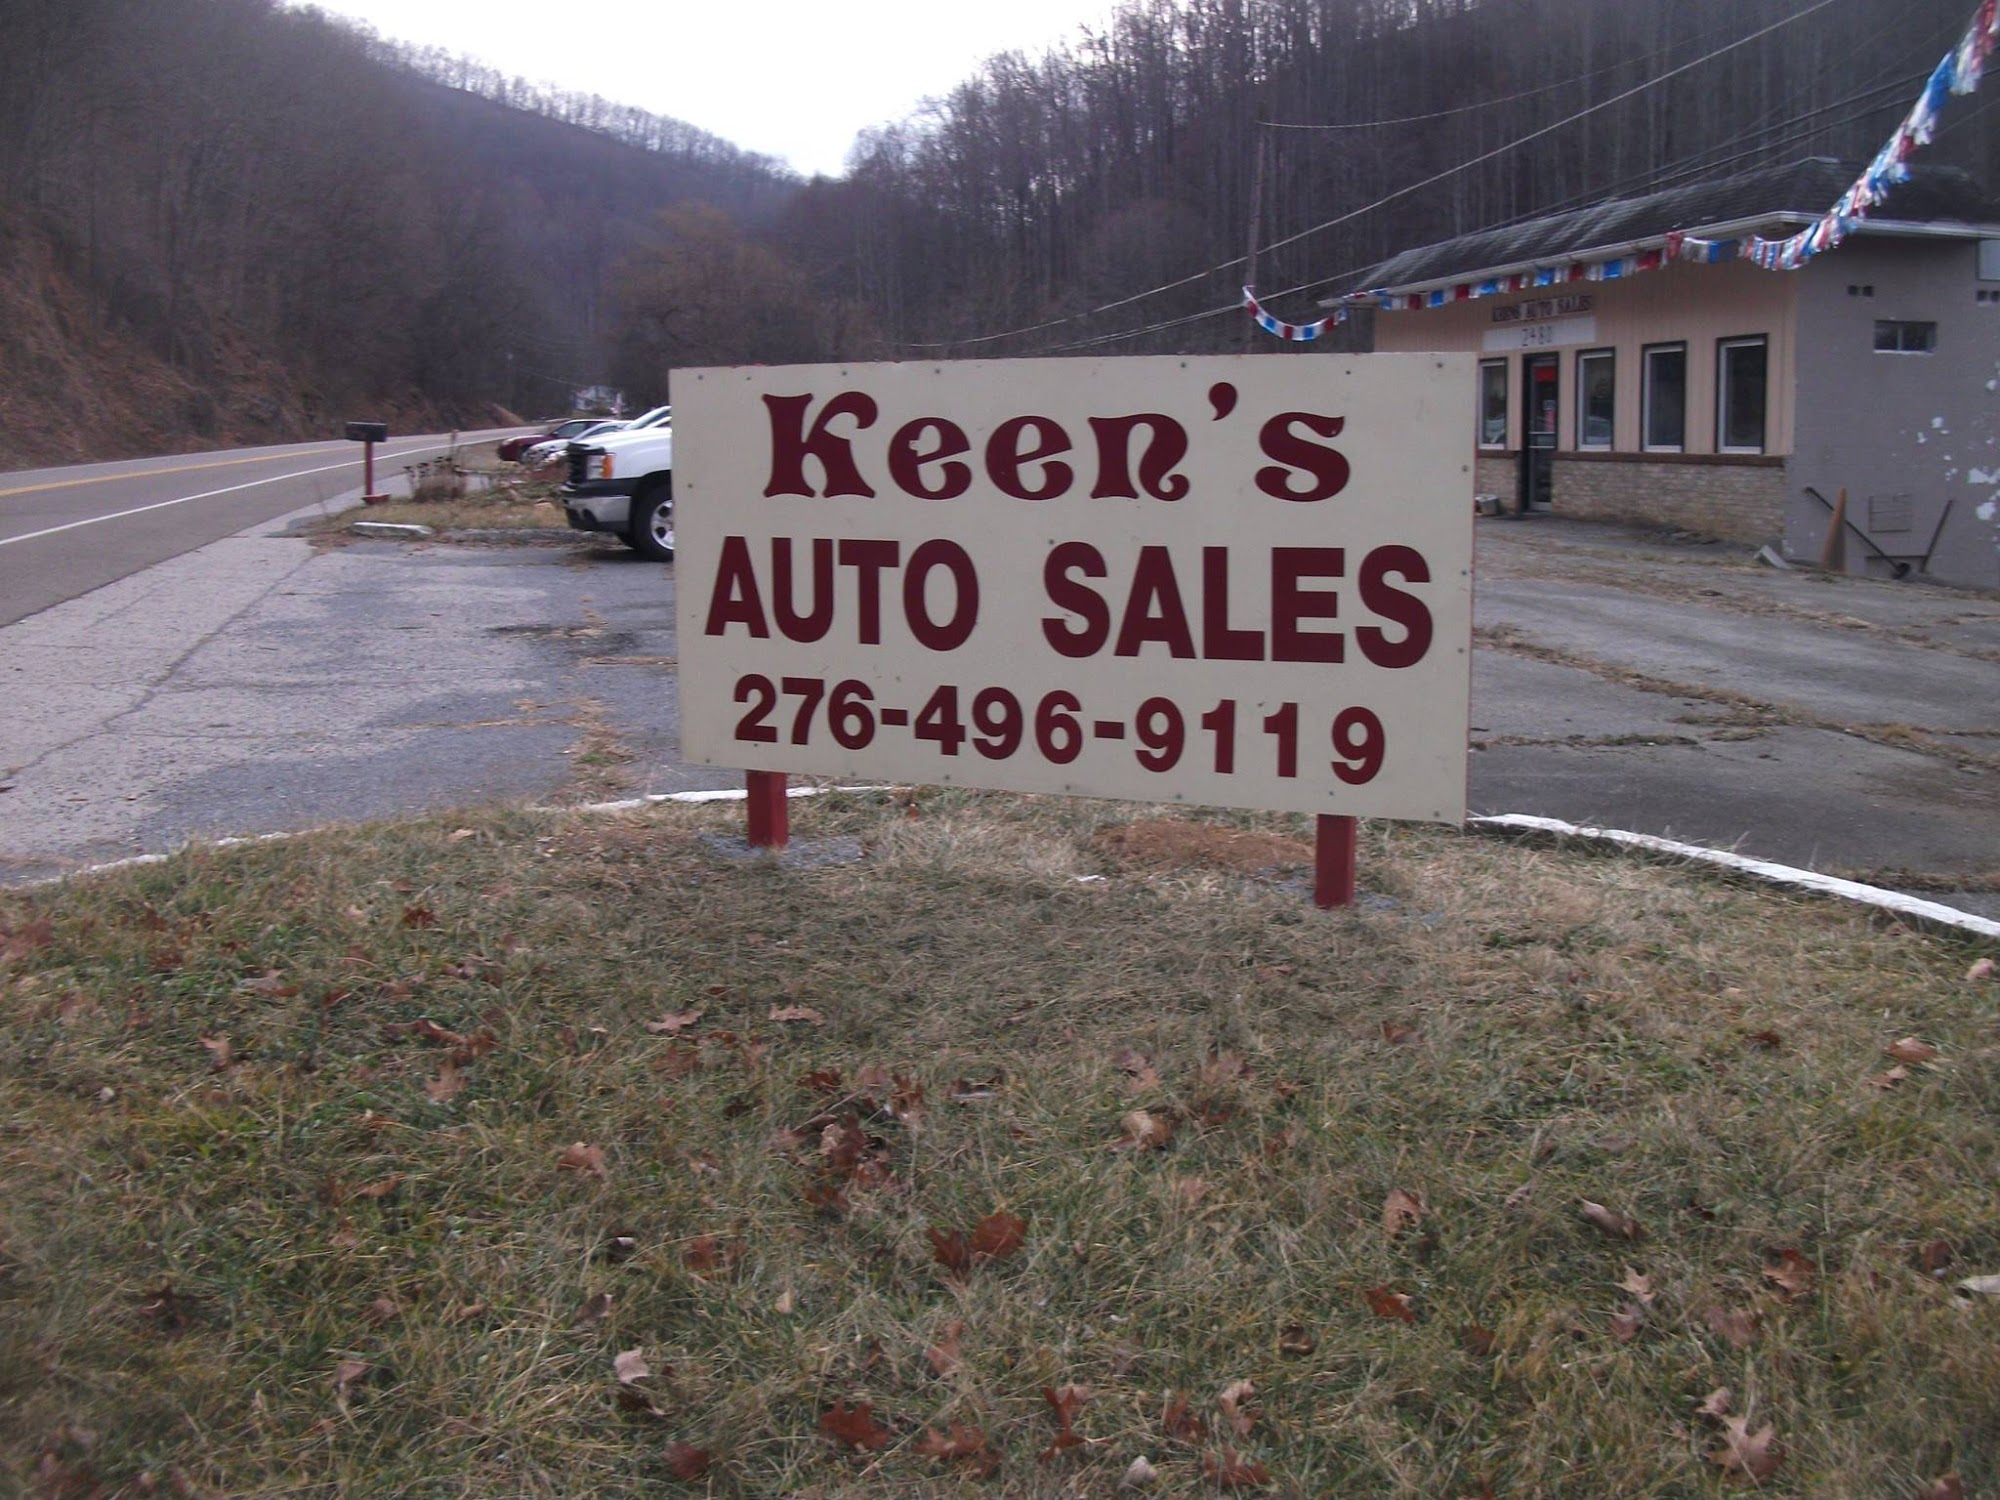 Keen's Auto Sales